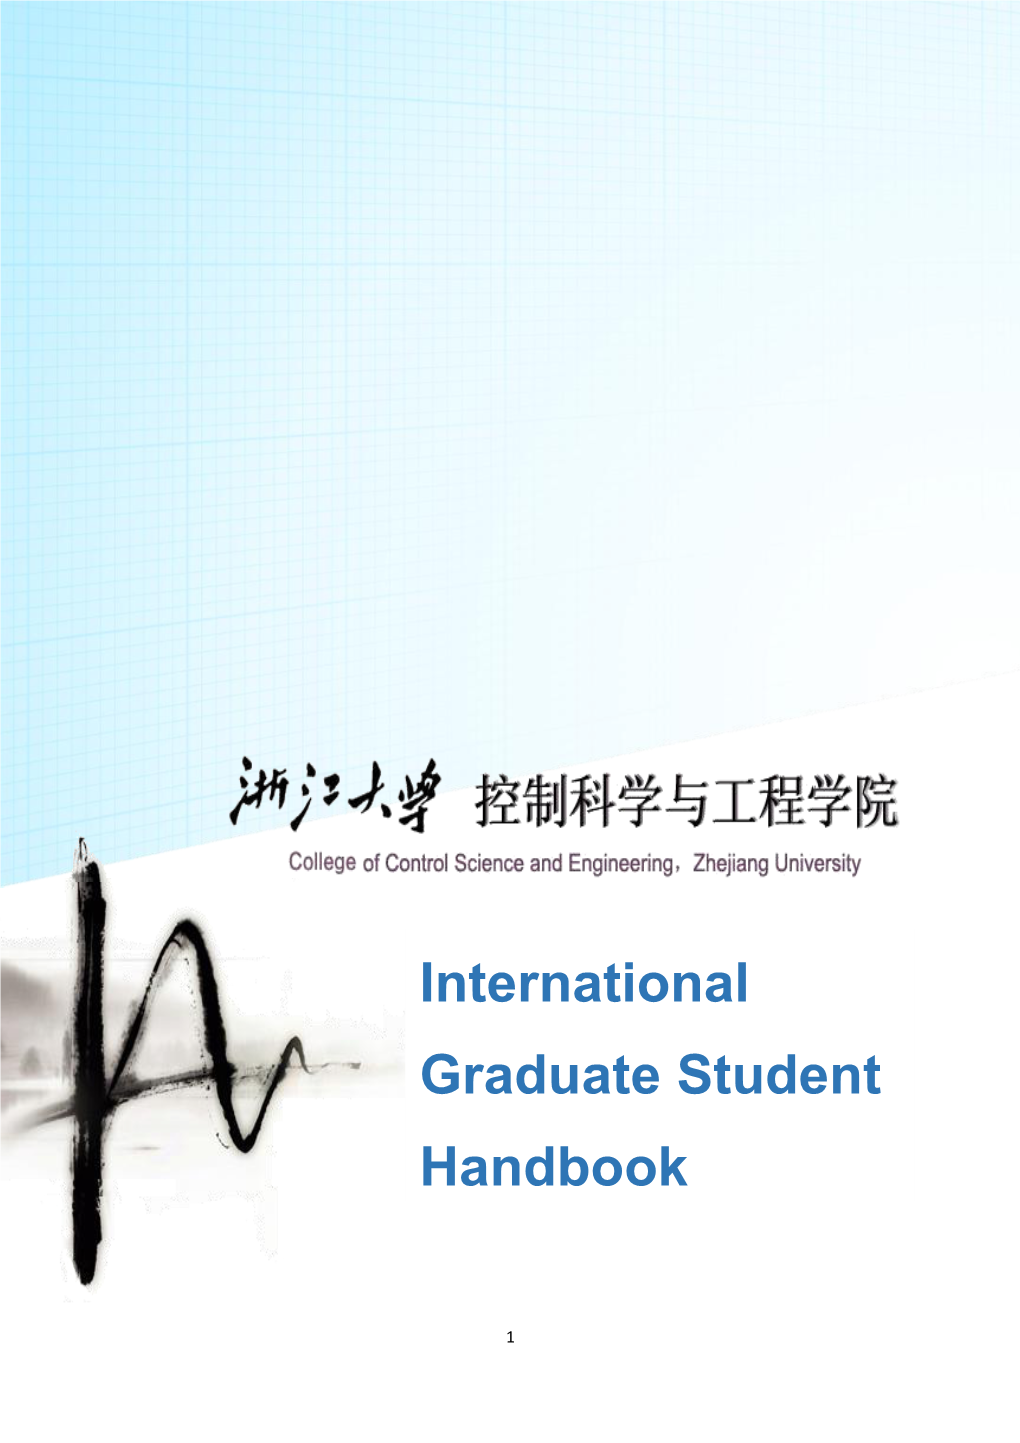 International Graduate Student Handbook